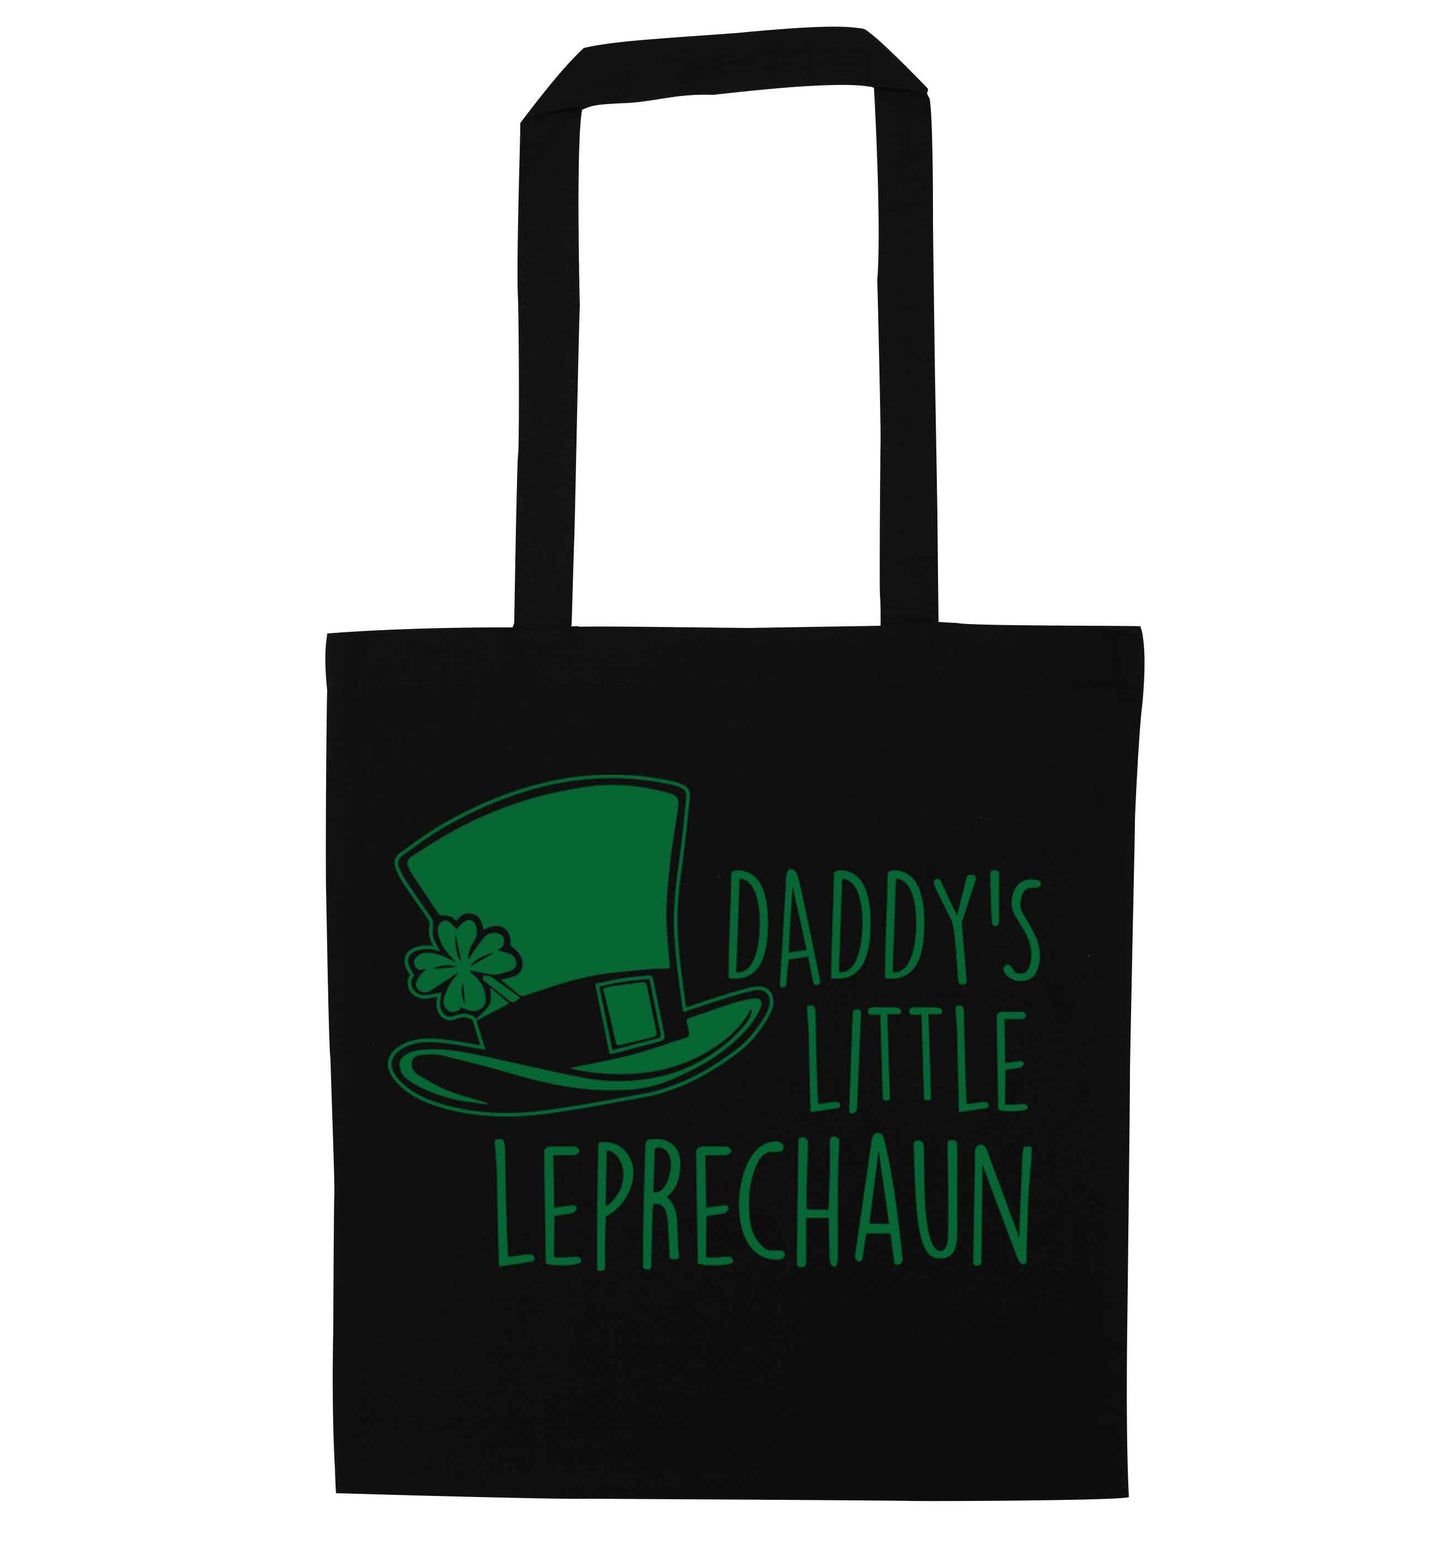 Daddy's little leprechaun black tote bag